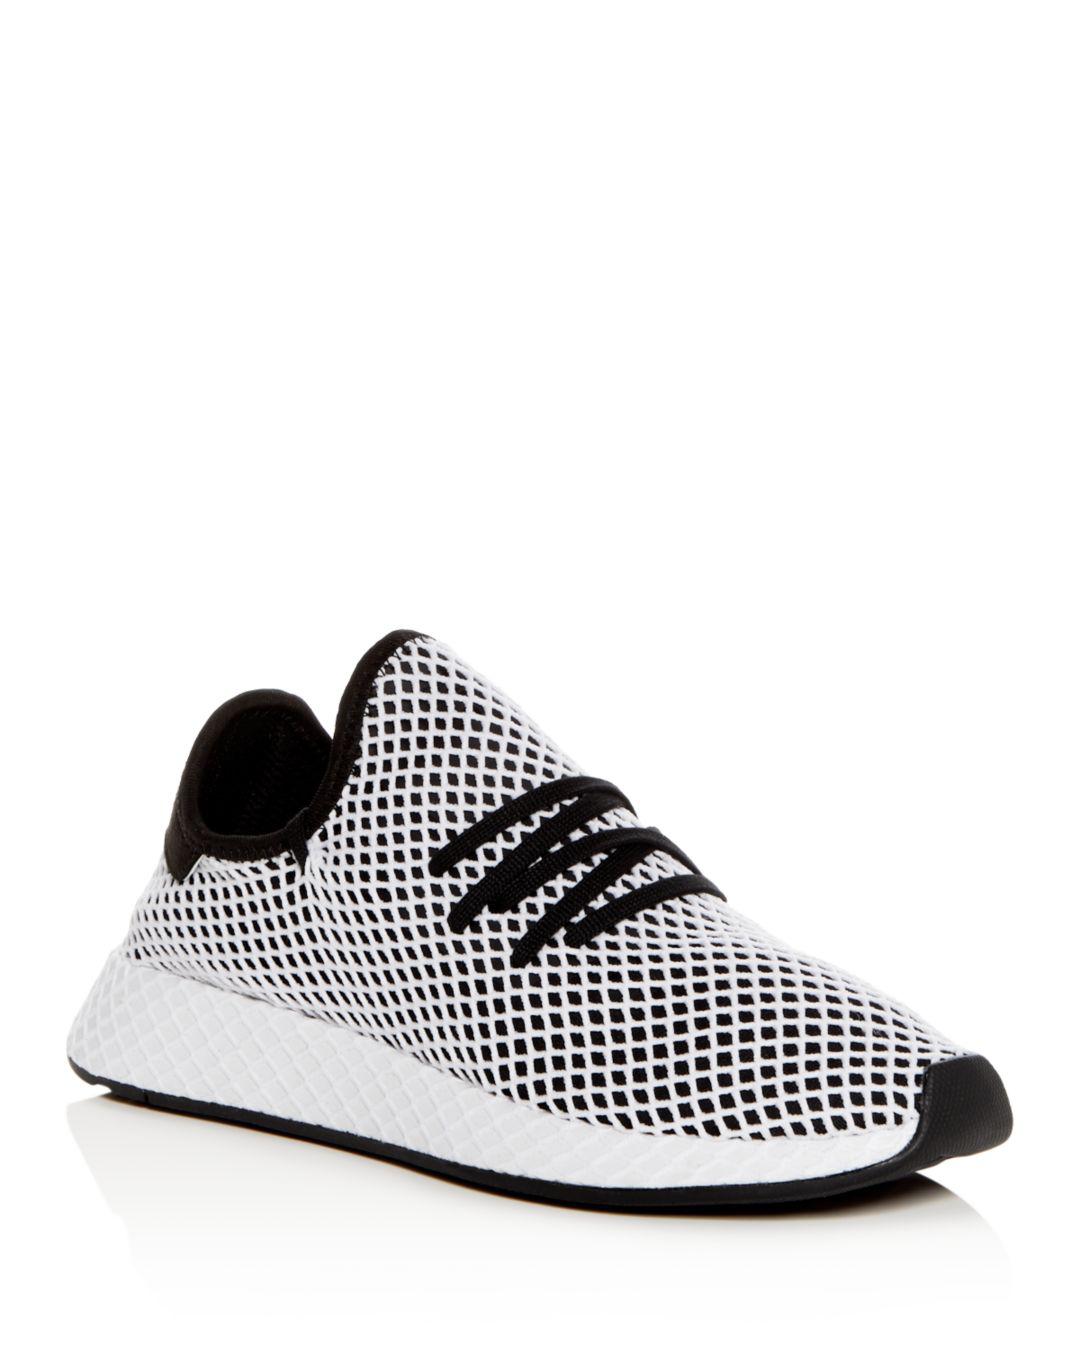 adidas Suede Deerupt Runner Shoes in Black/White (Black) for Men - Lyst